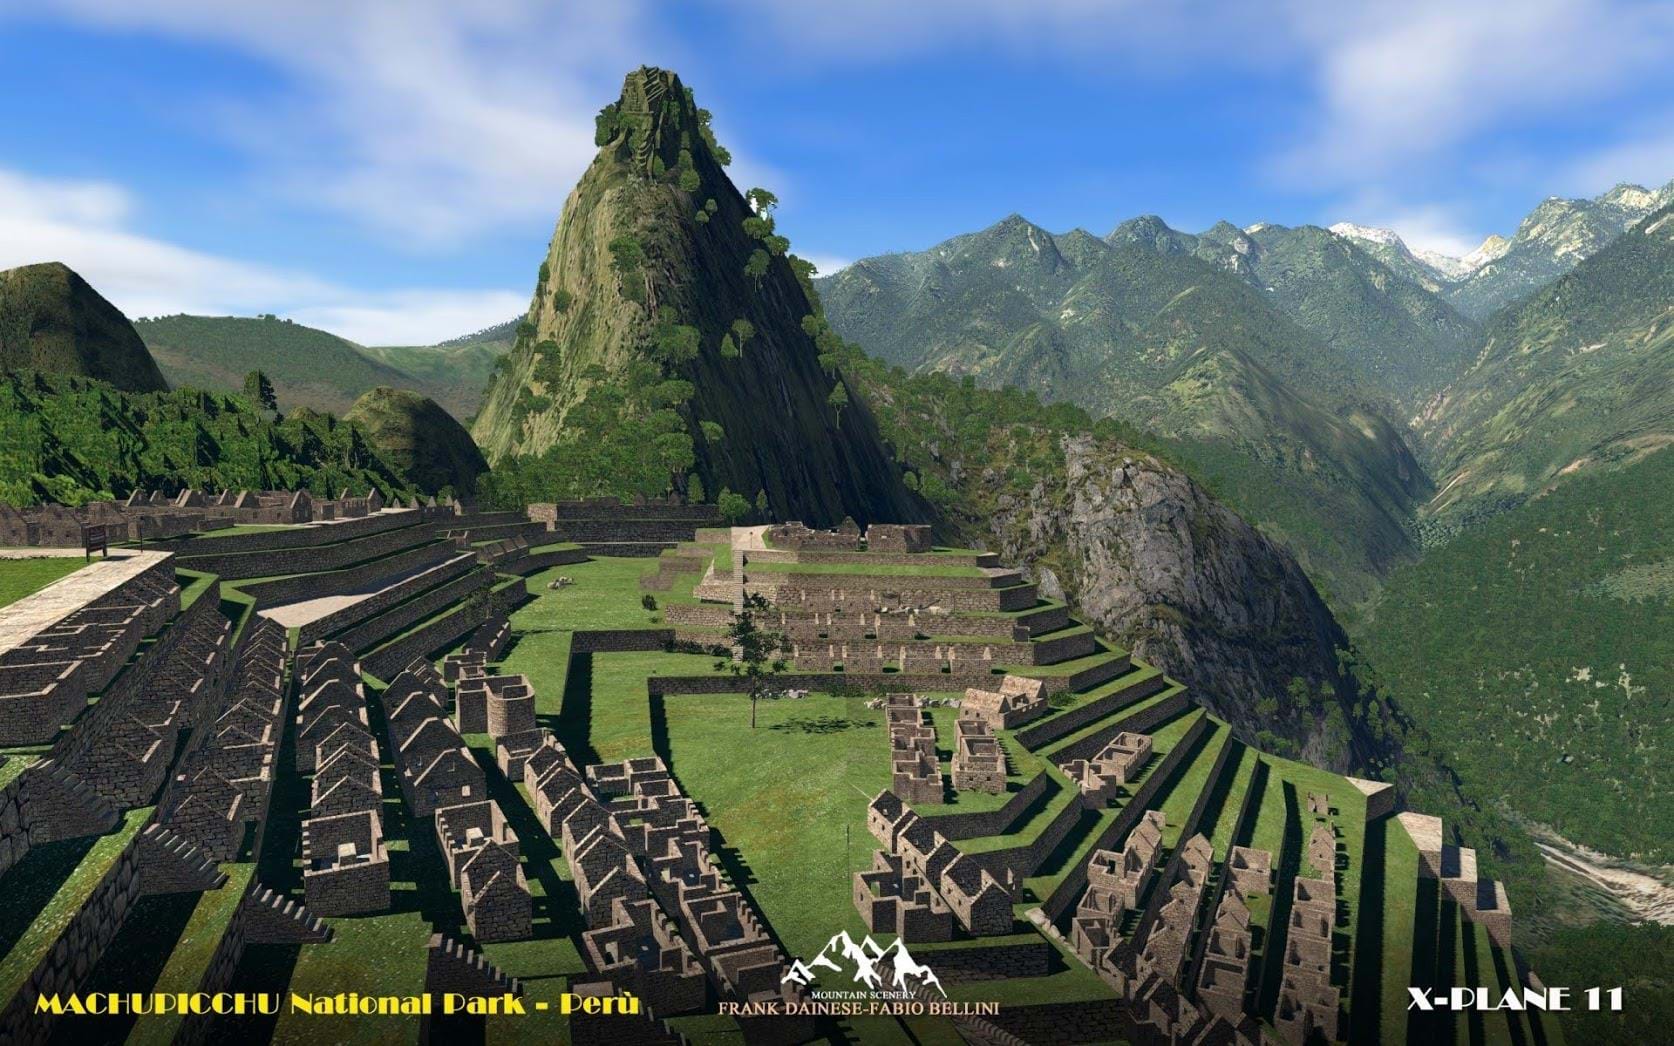 Frank Dainese and Fabio Bellini Machu Picchu National Park for X-Plane